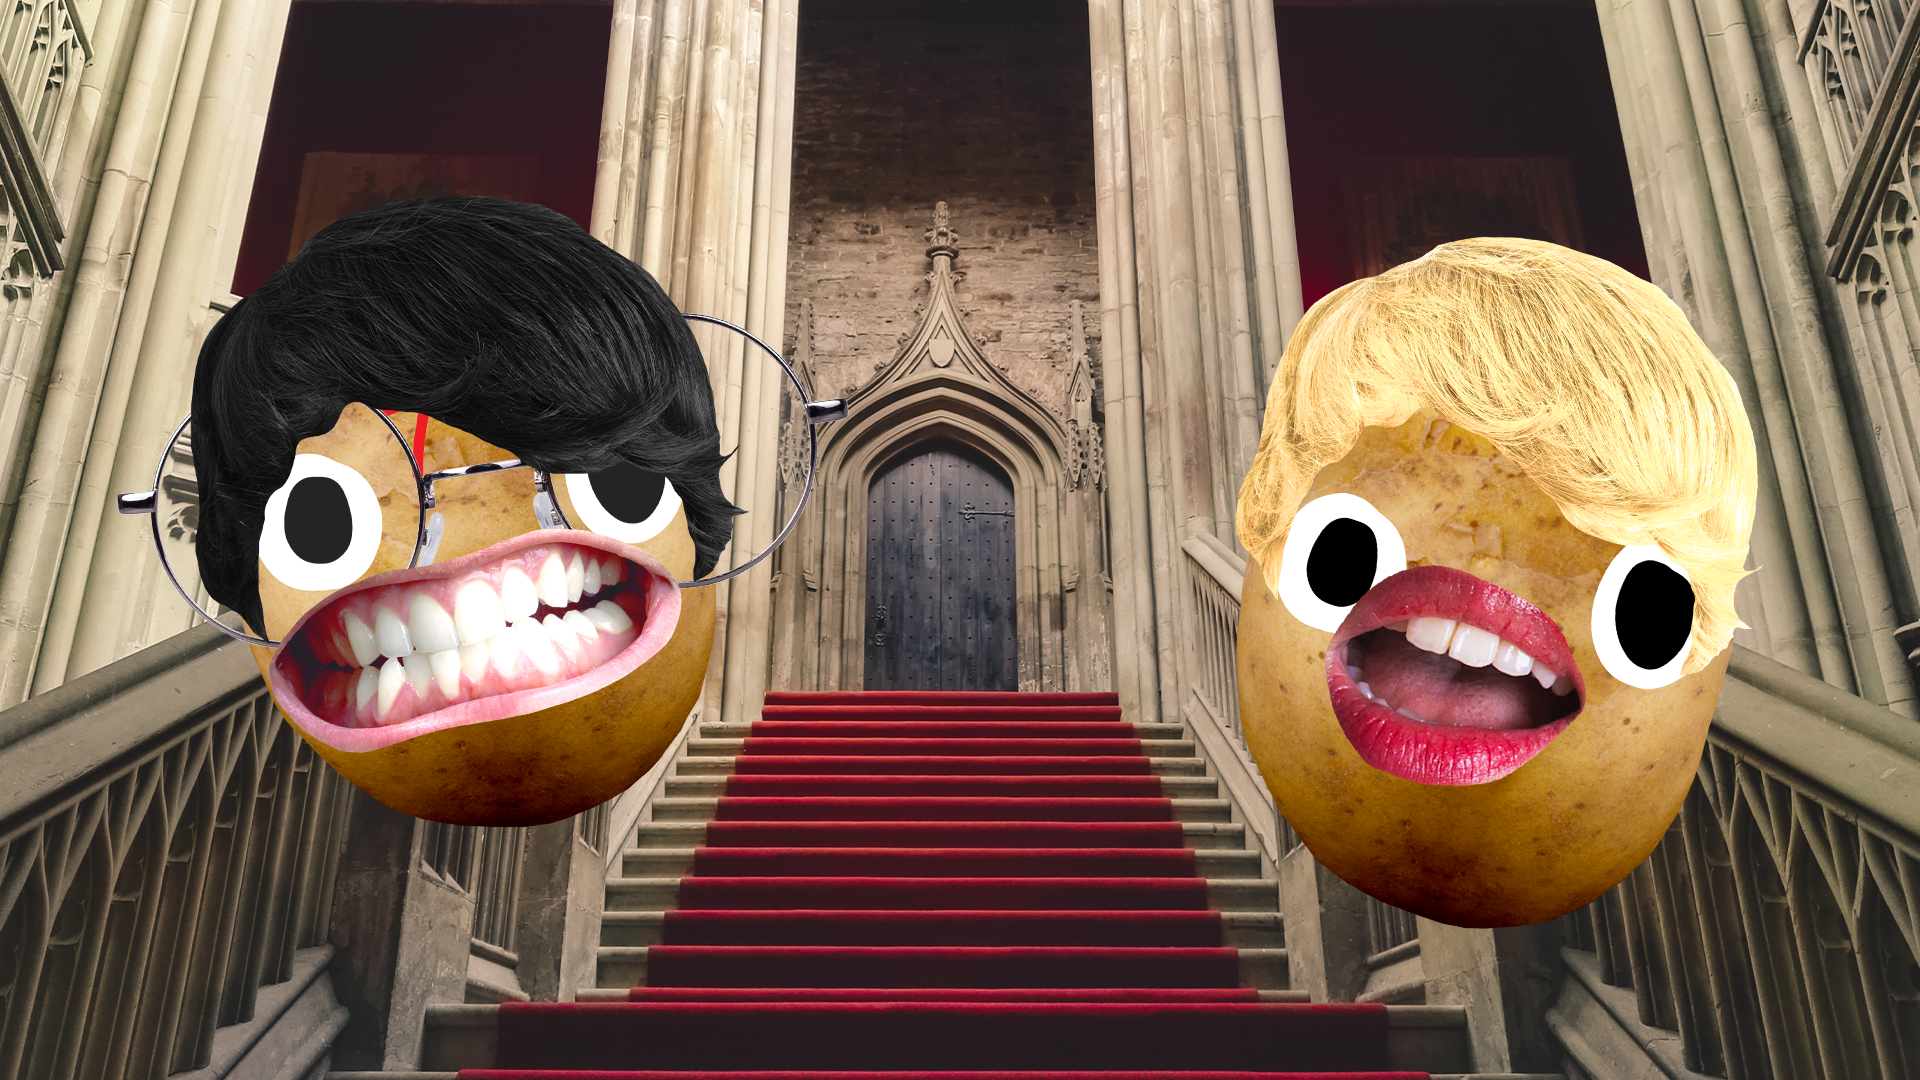 Potato Harry and potato Gilderoy on staircase